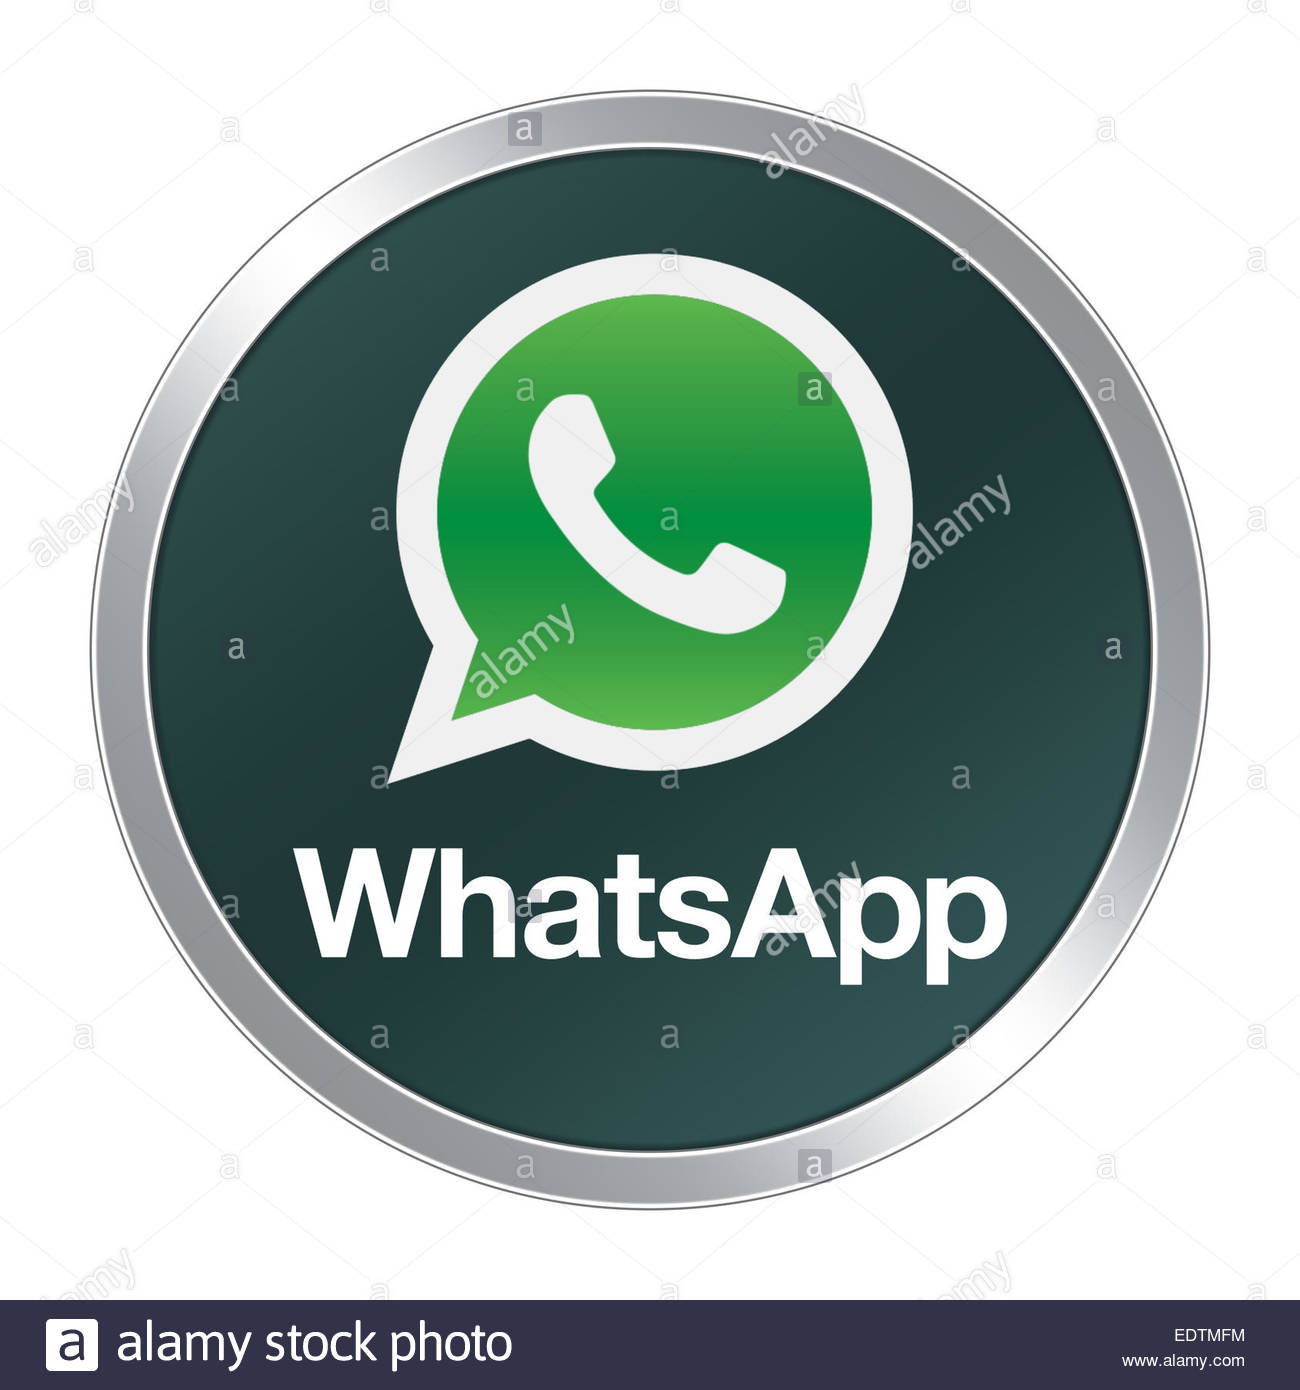 Whatsapp logo Icons | Free Download